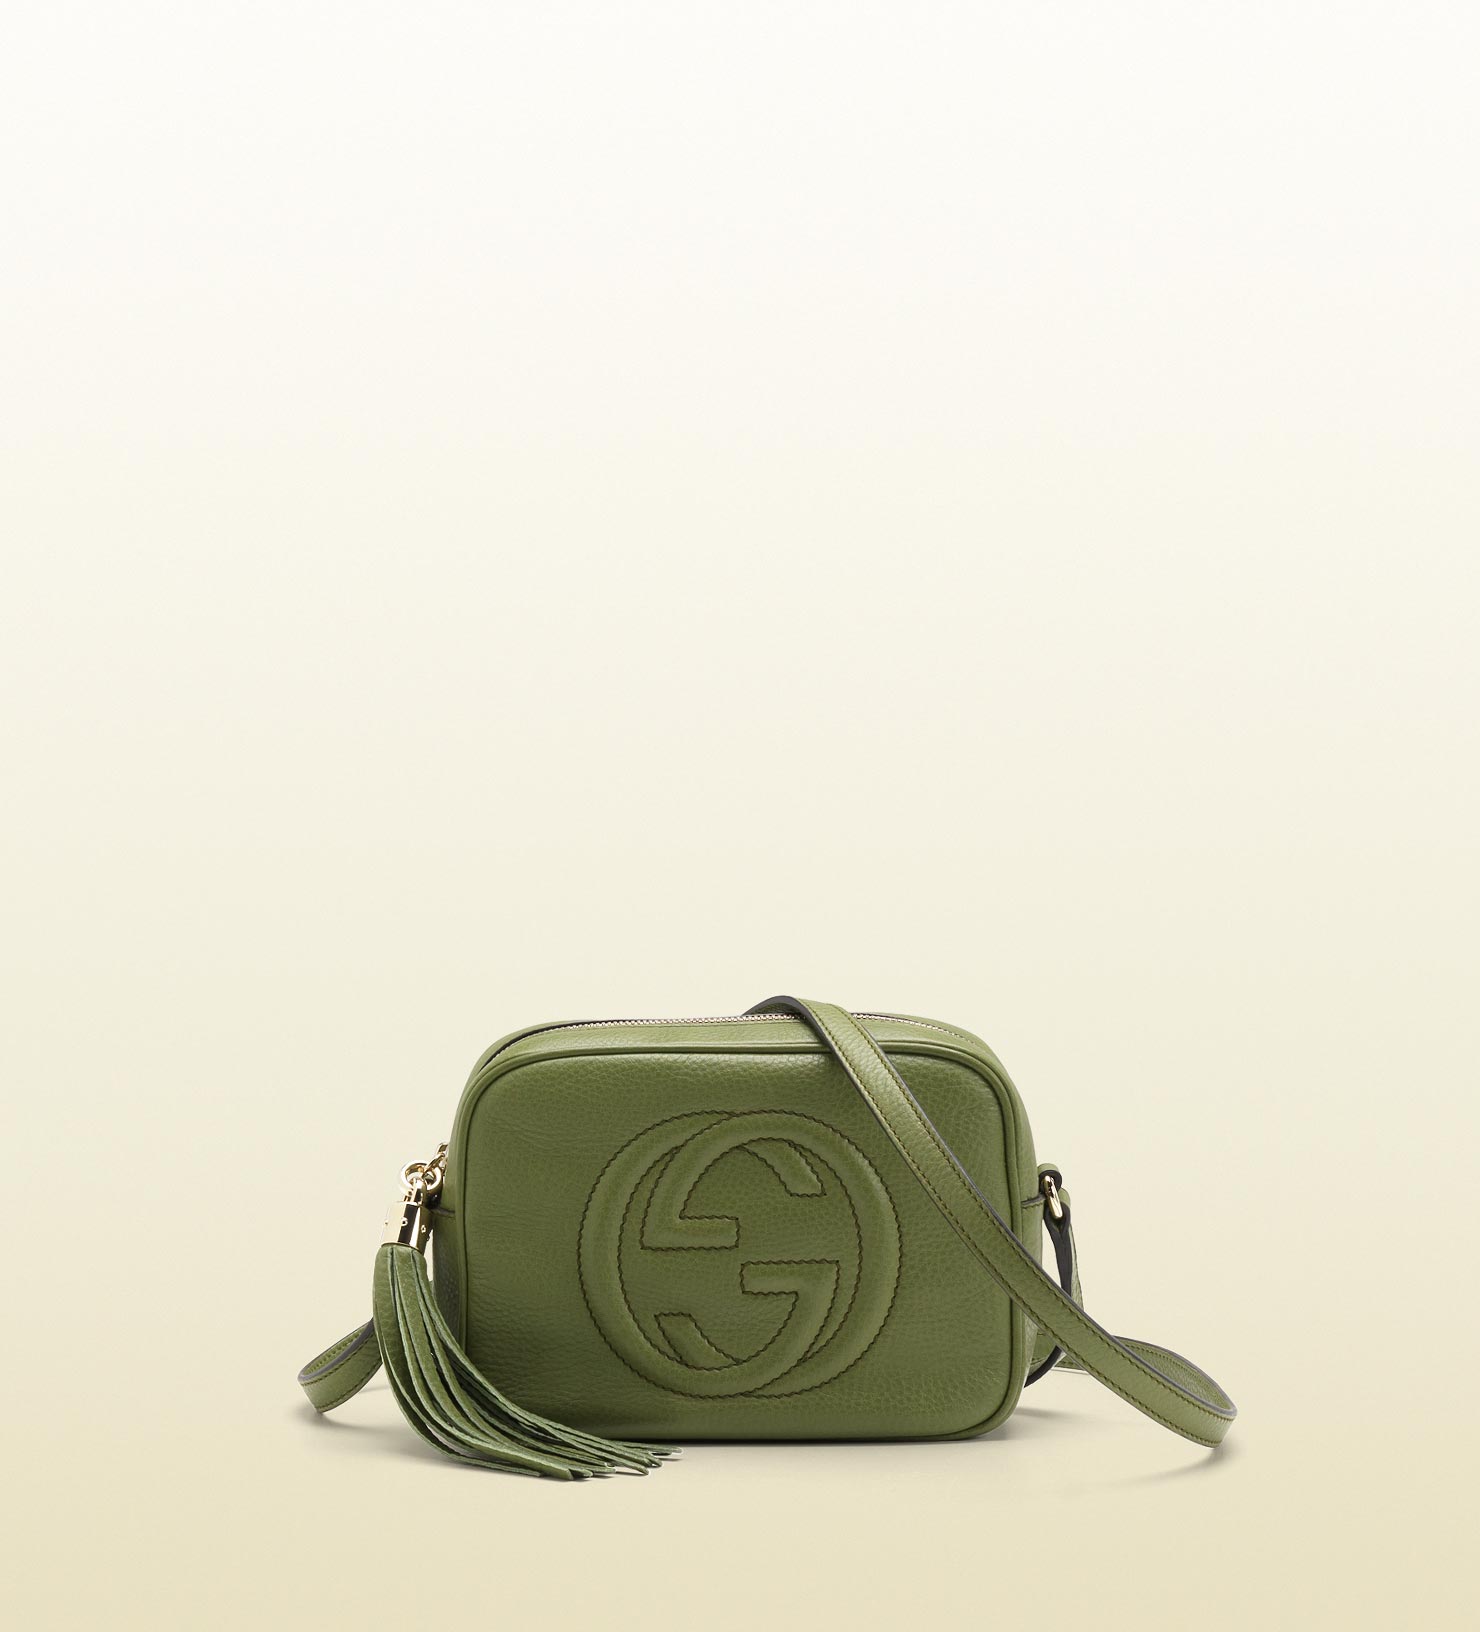 Gucci Soho Green Leather Disco Bag | Lyst